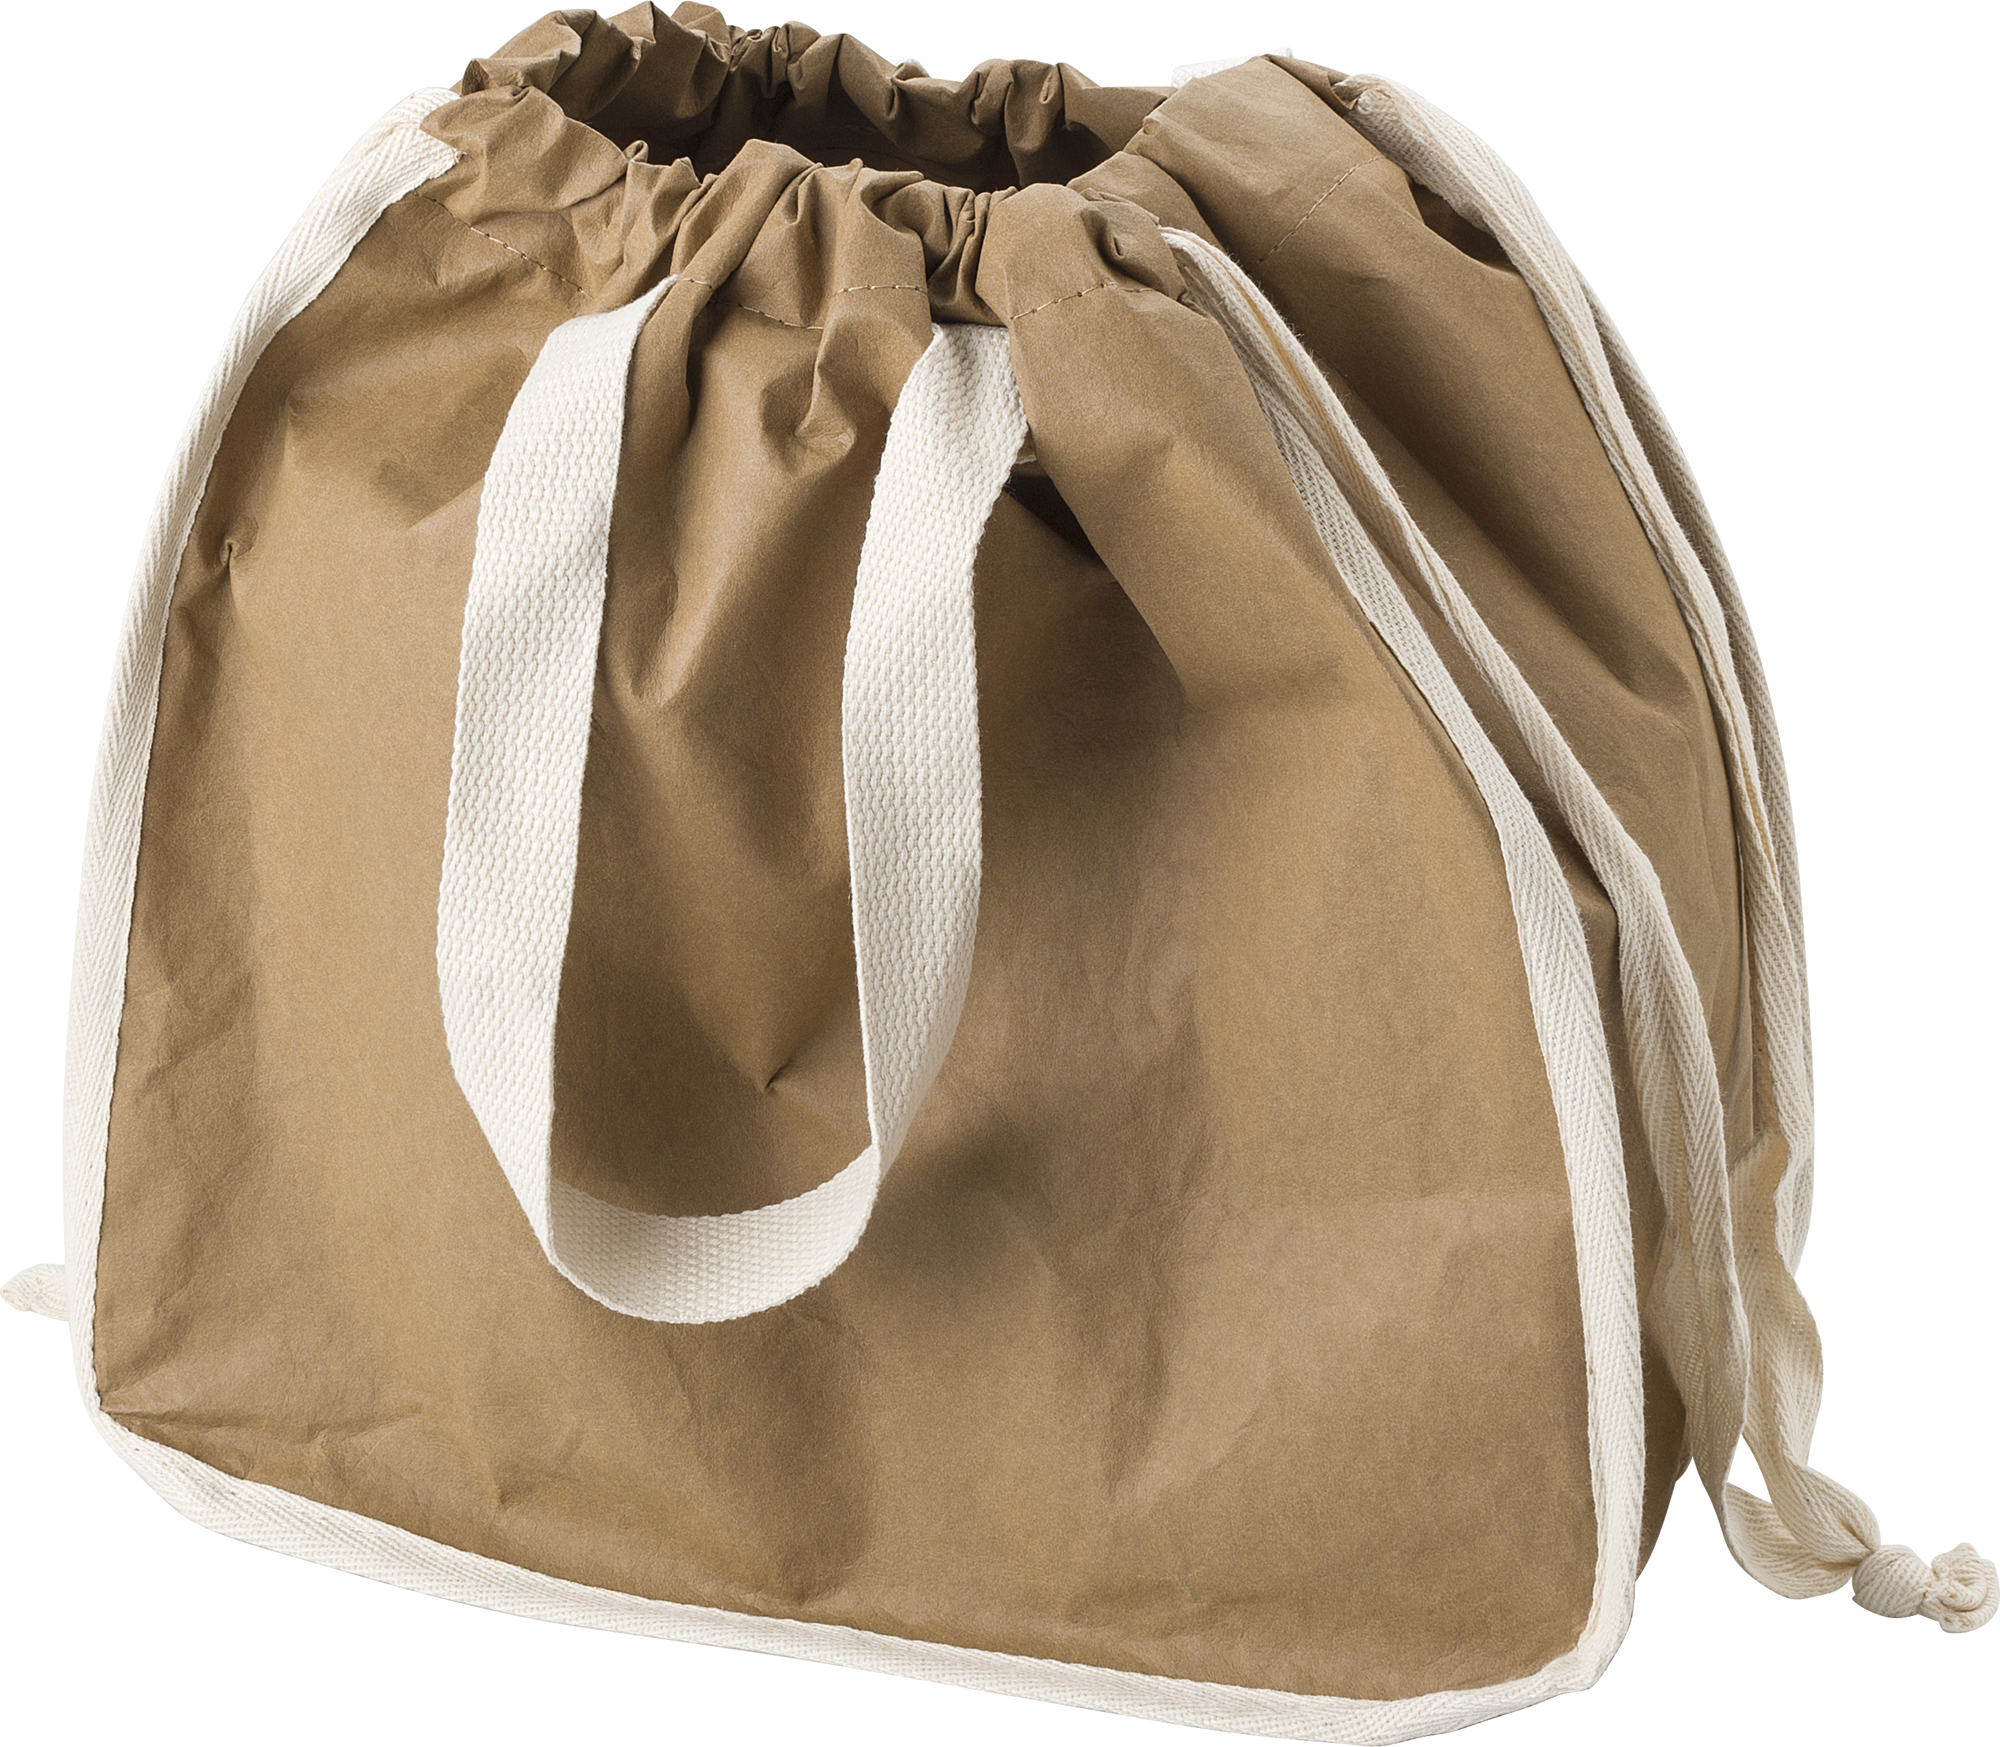 000000967392 011999999 3d045 rgt pro01 2023 fal - Kraft shopping bag